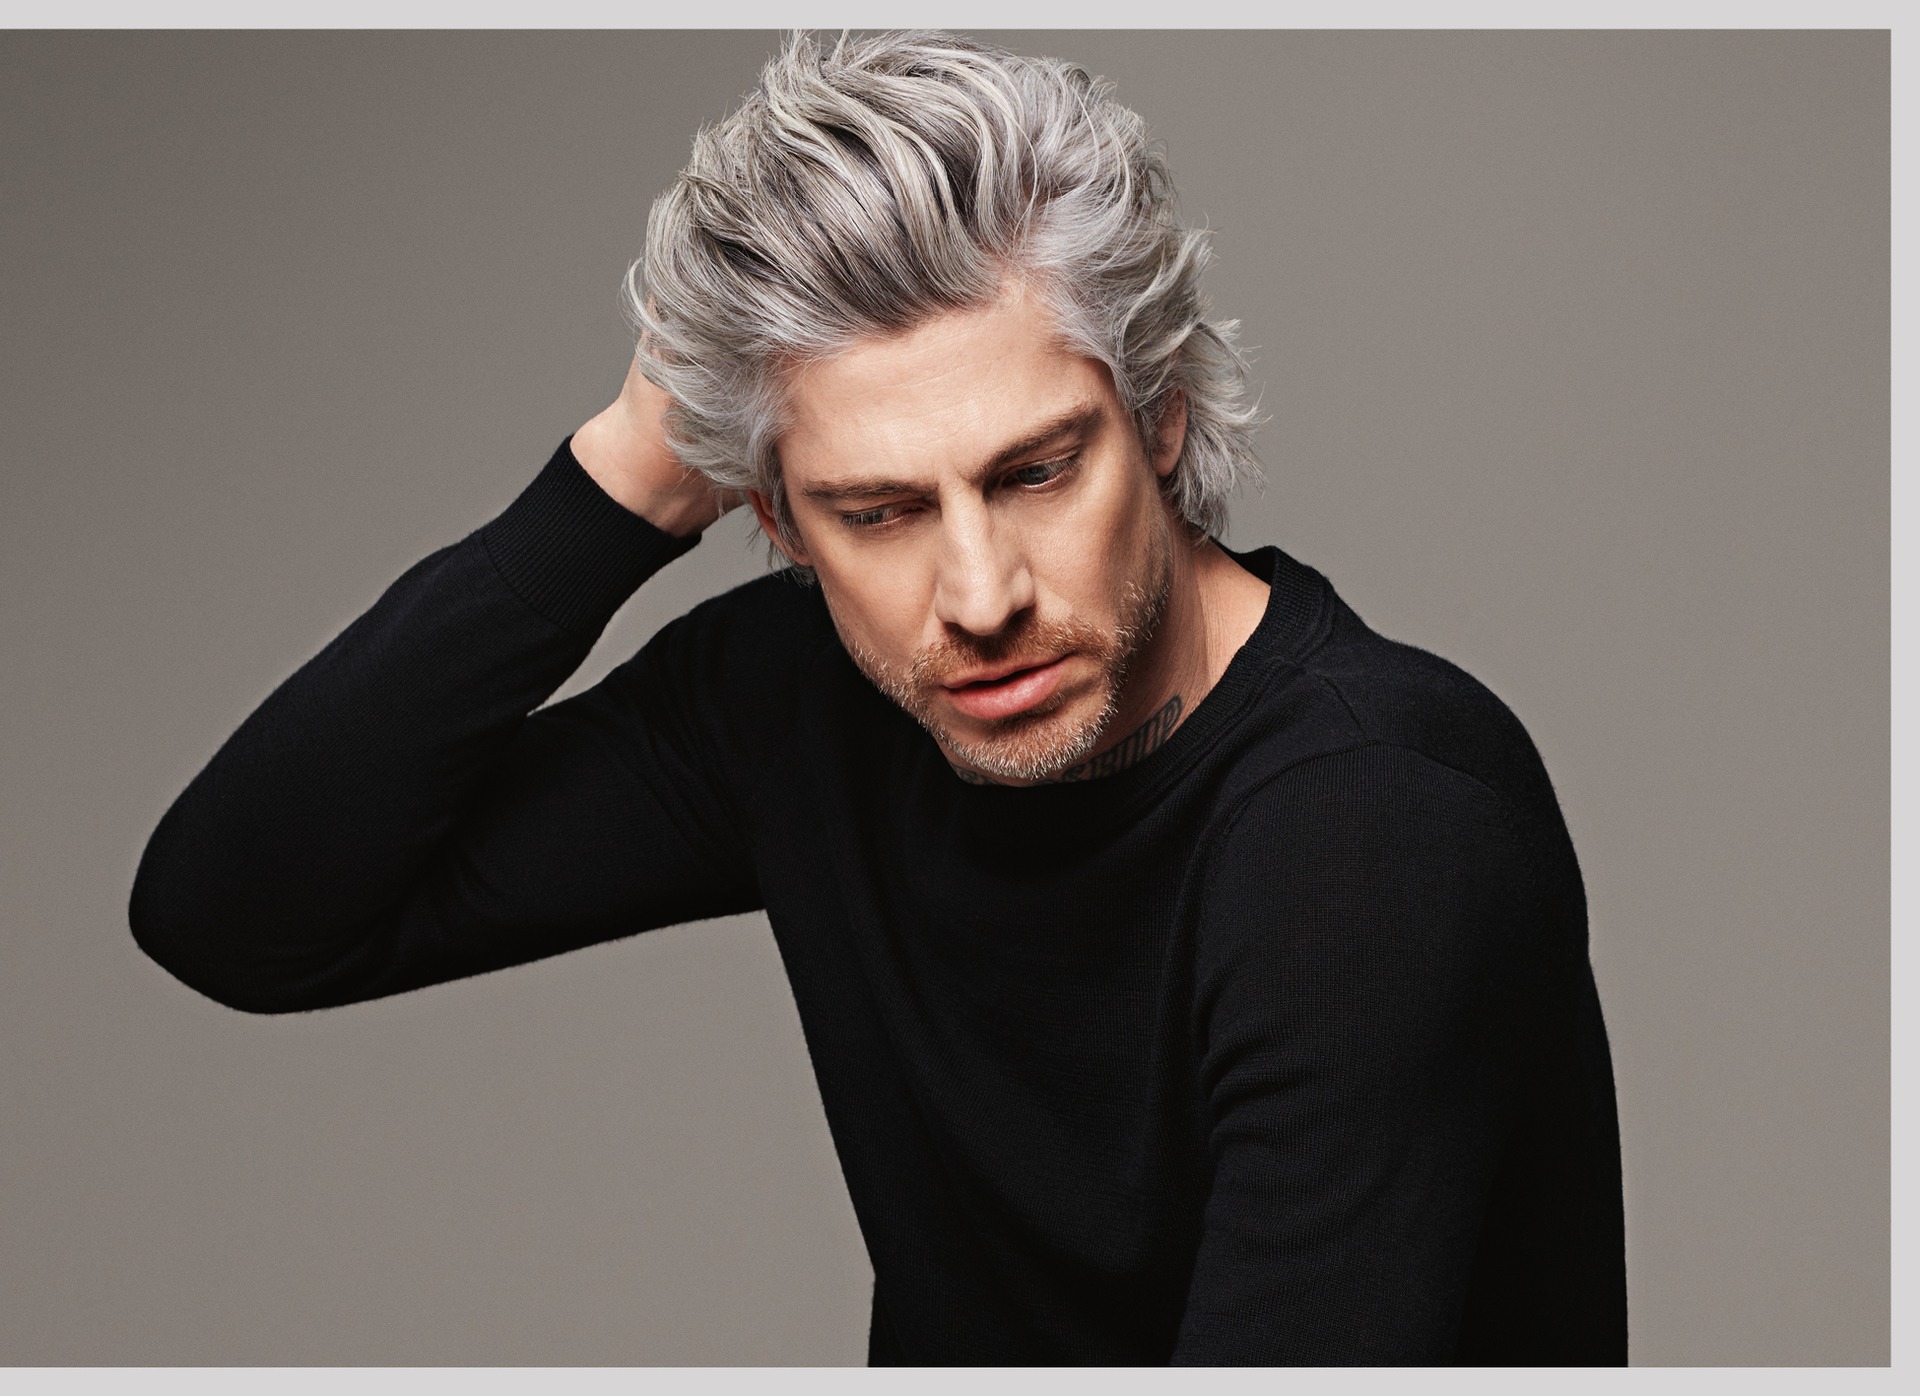 Покраска седых волос у мужчин фото до и после